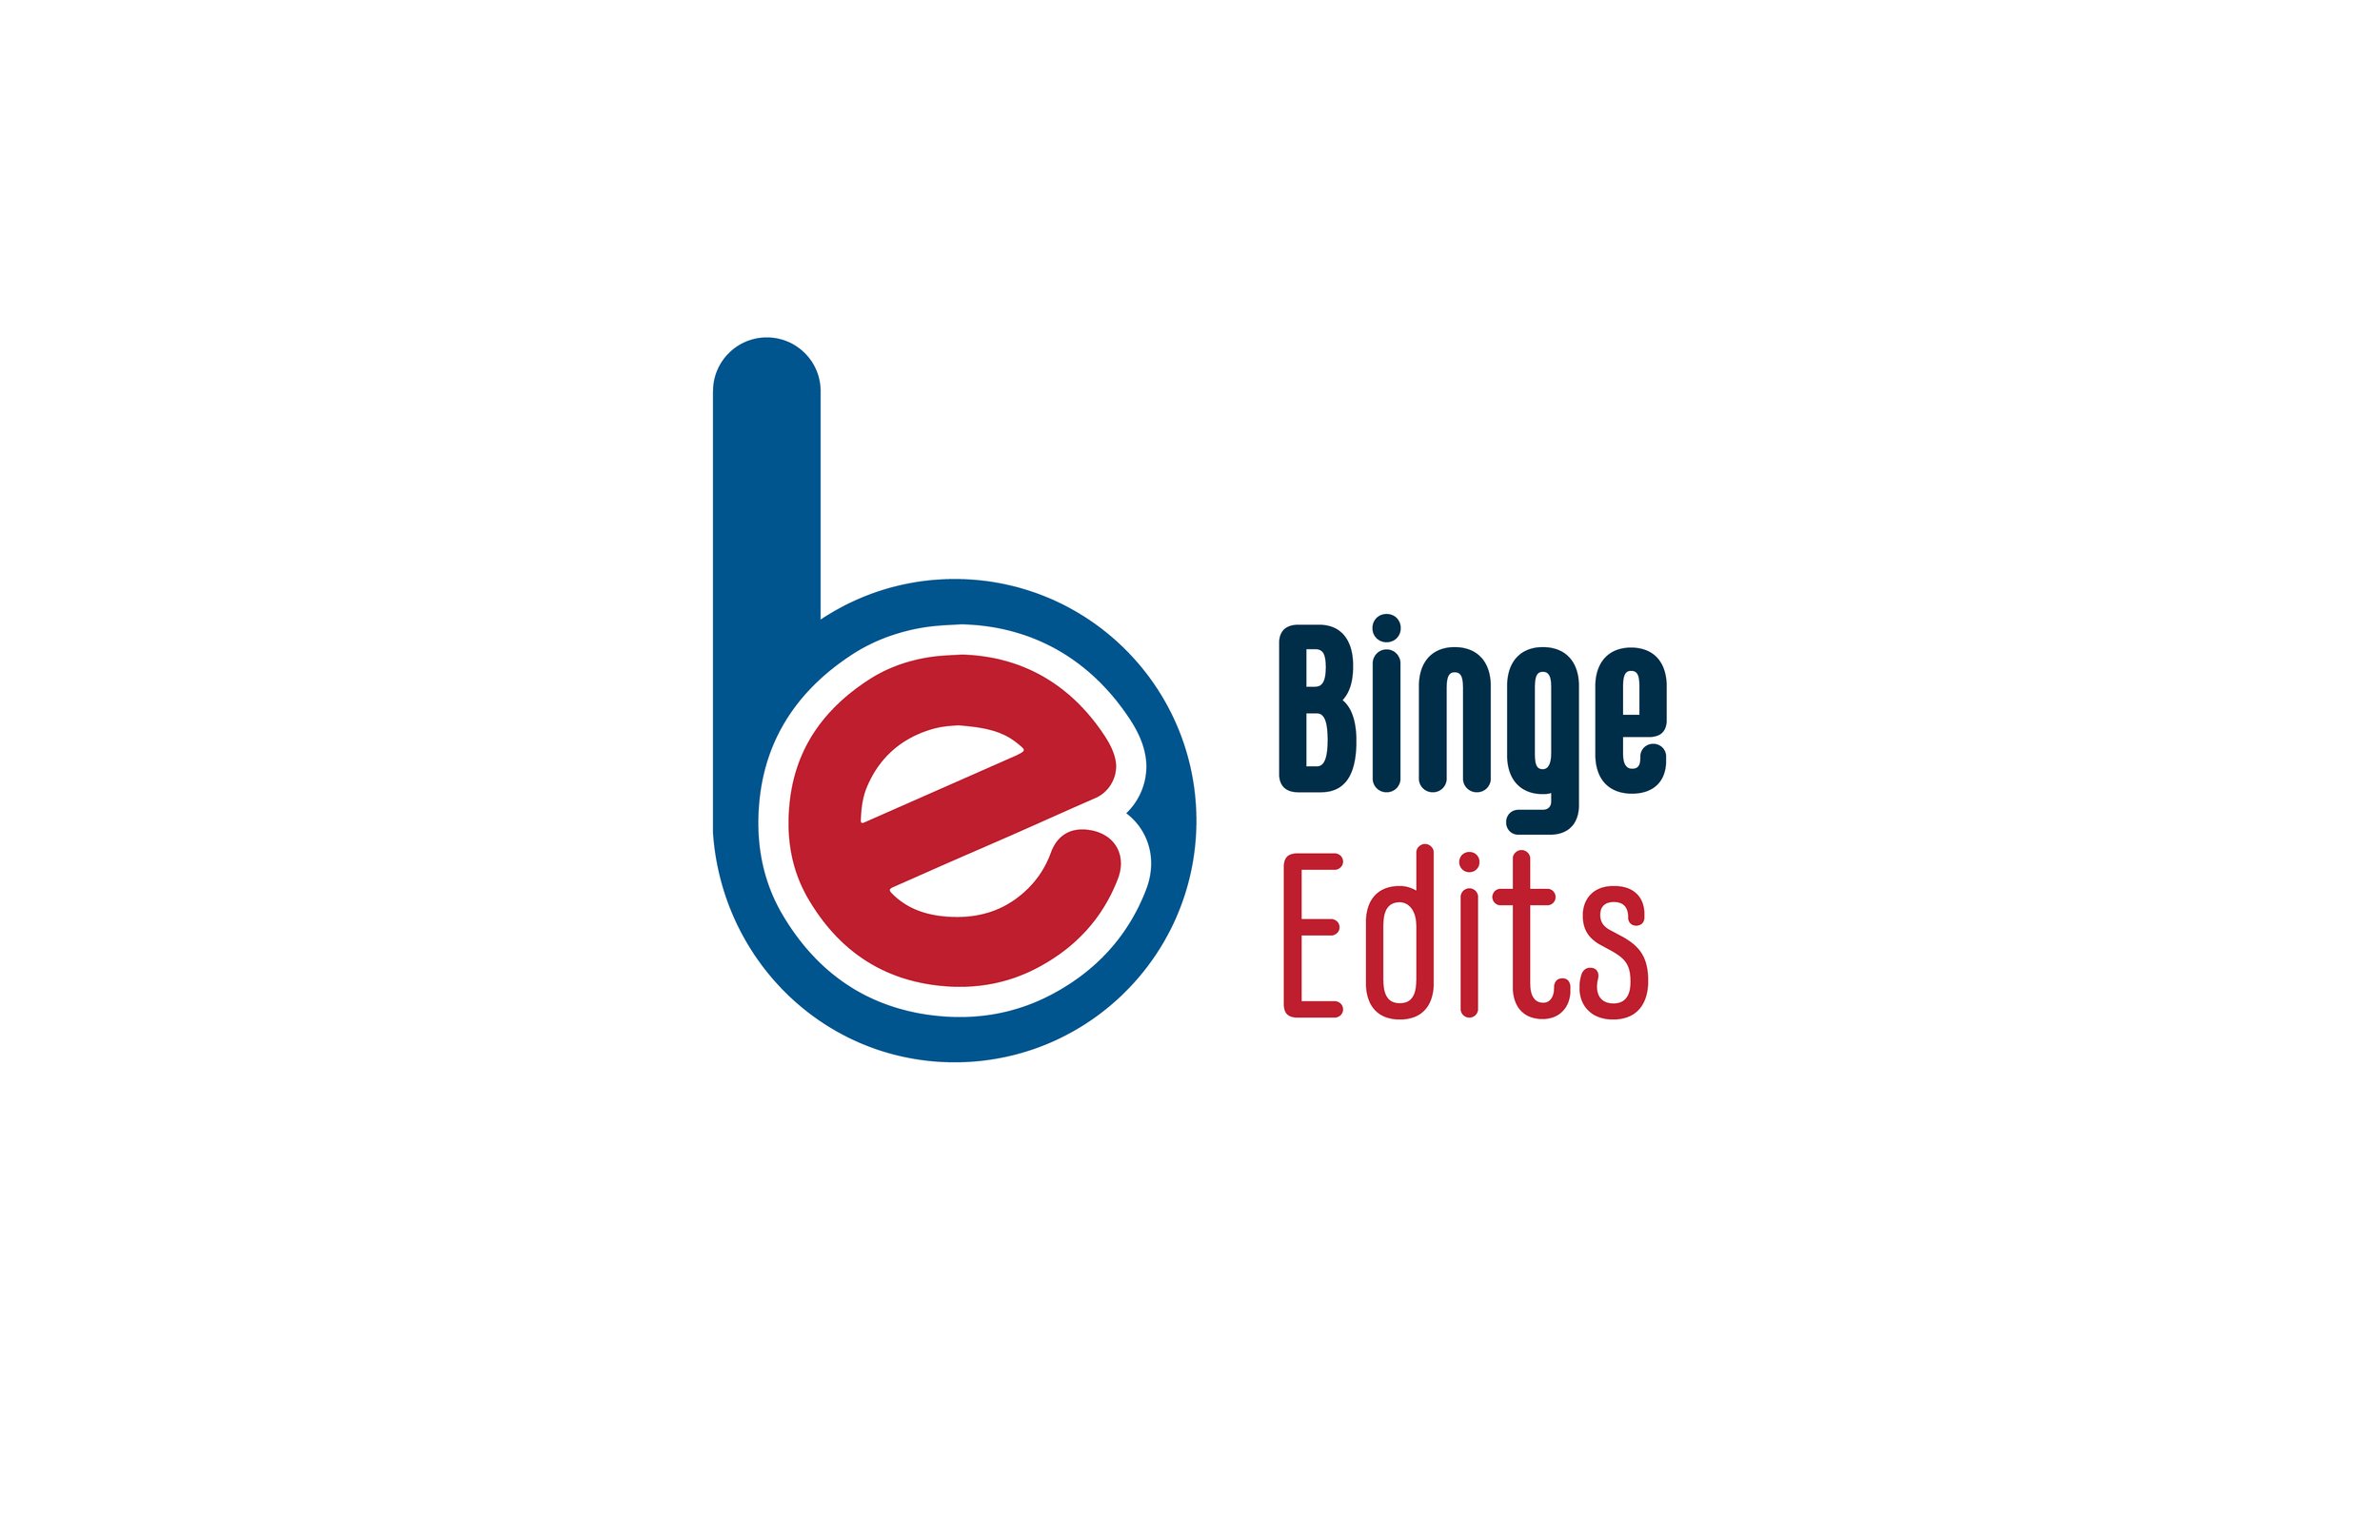 BE_110421 - Binge Edits Branding Porfolio_PROOF 1.jpg